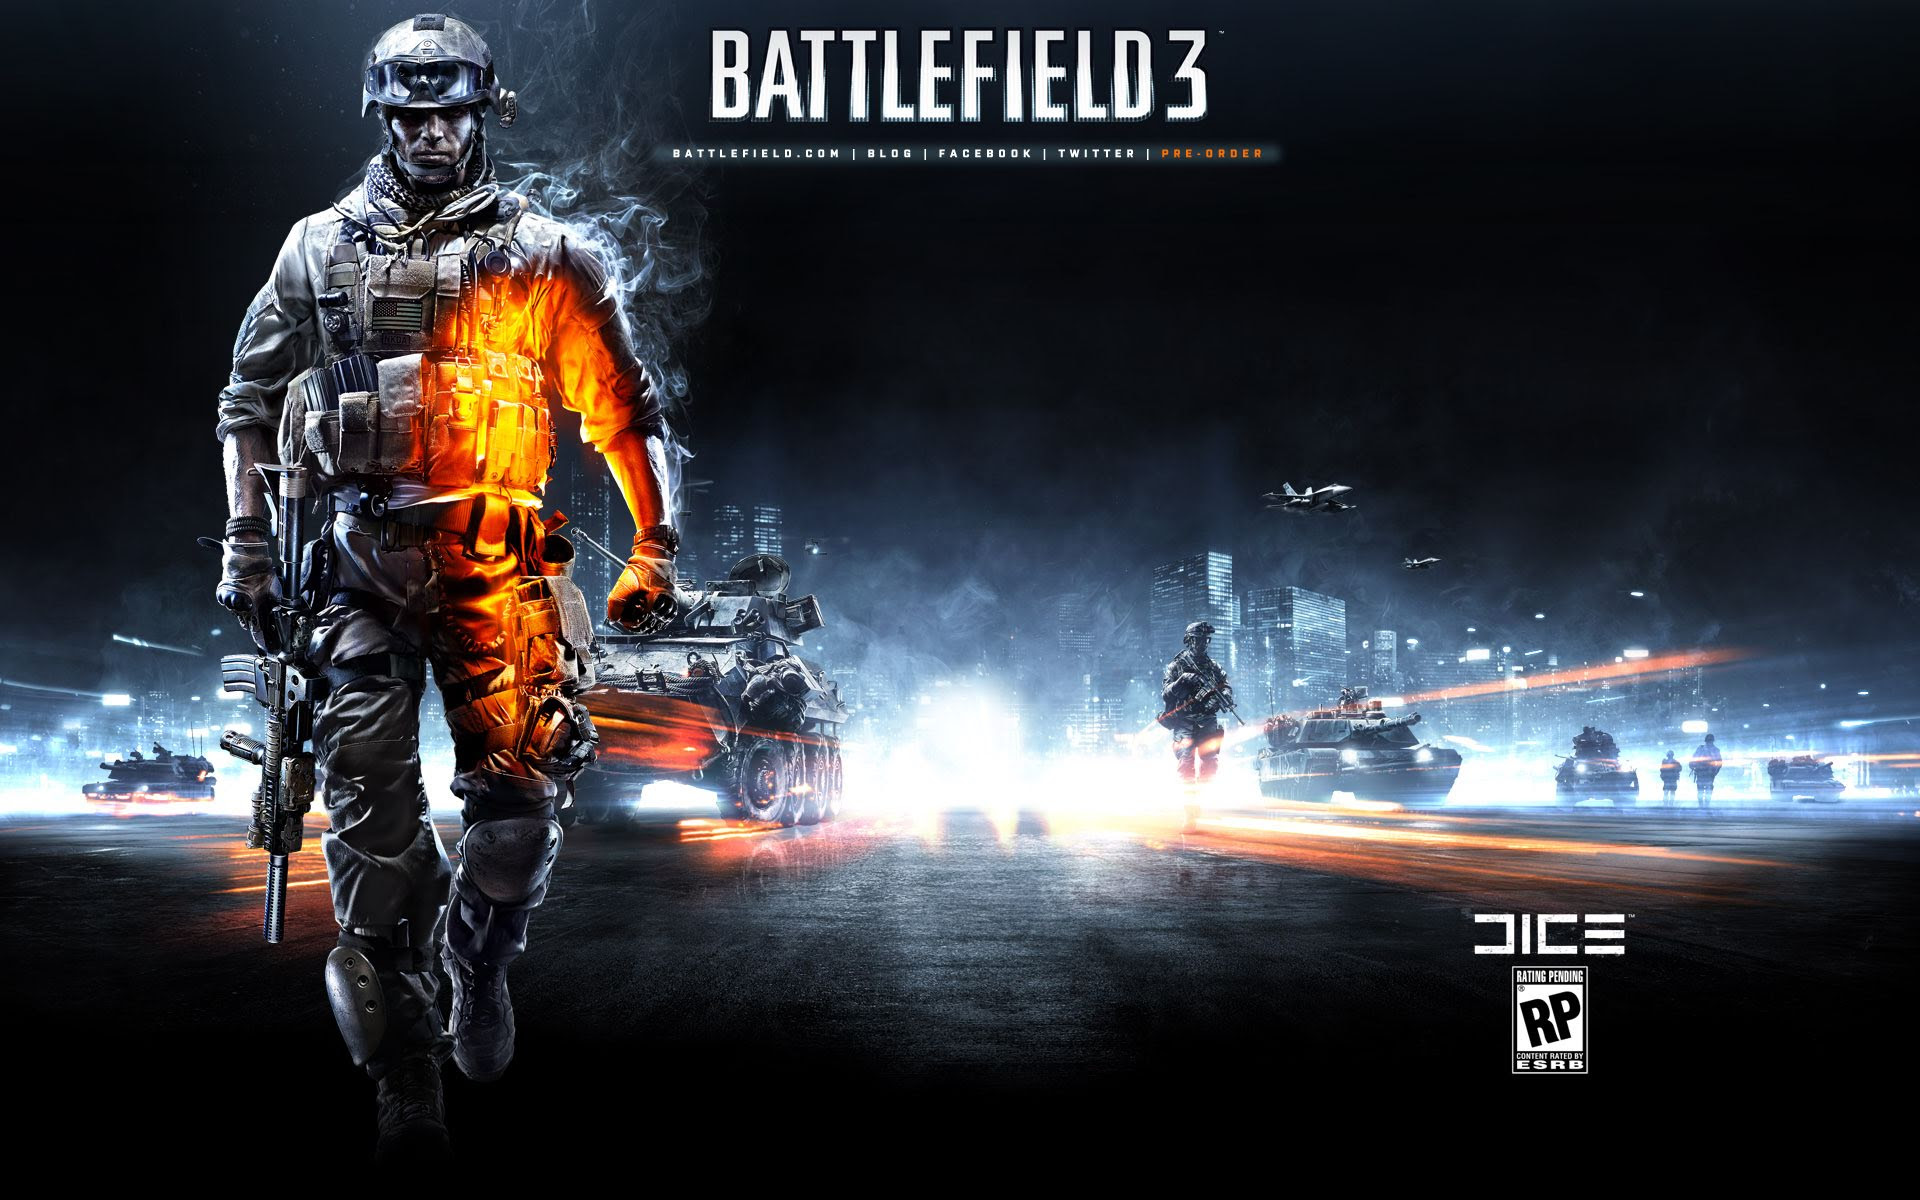 Battlefield 3 Game Wallpapers | HD Wallpapers